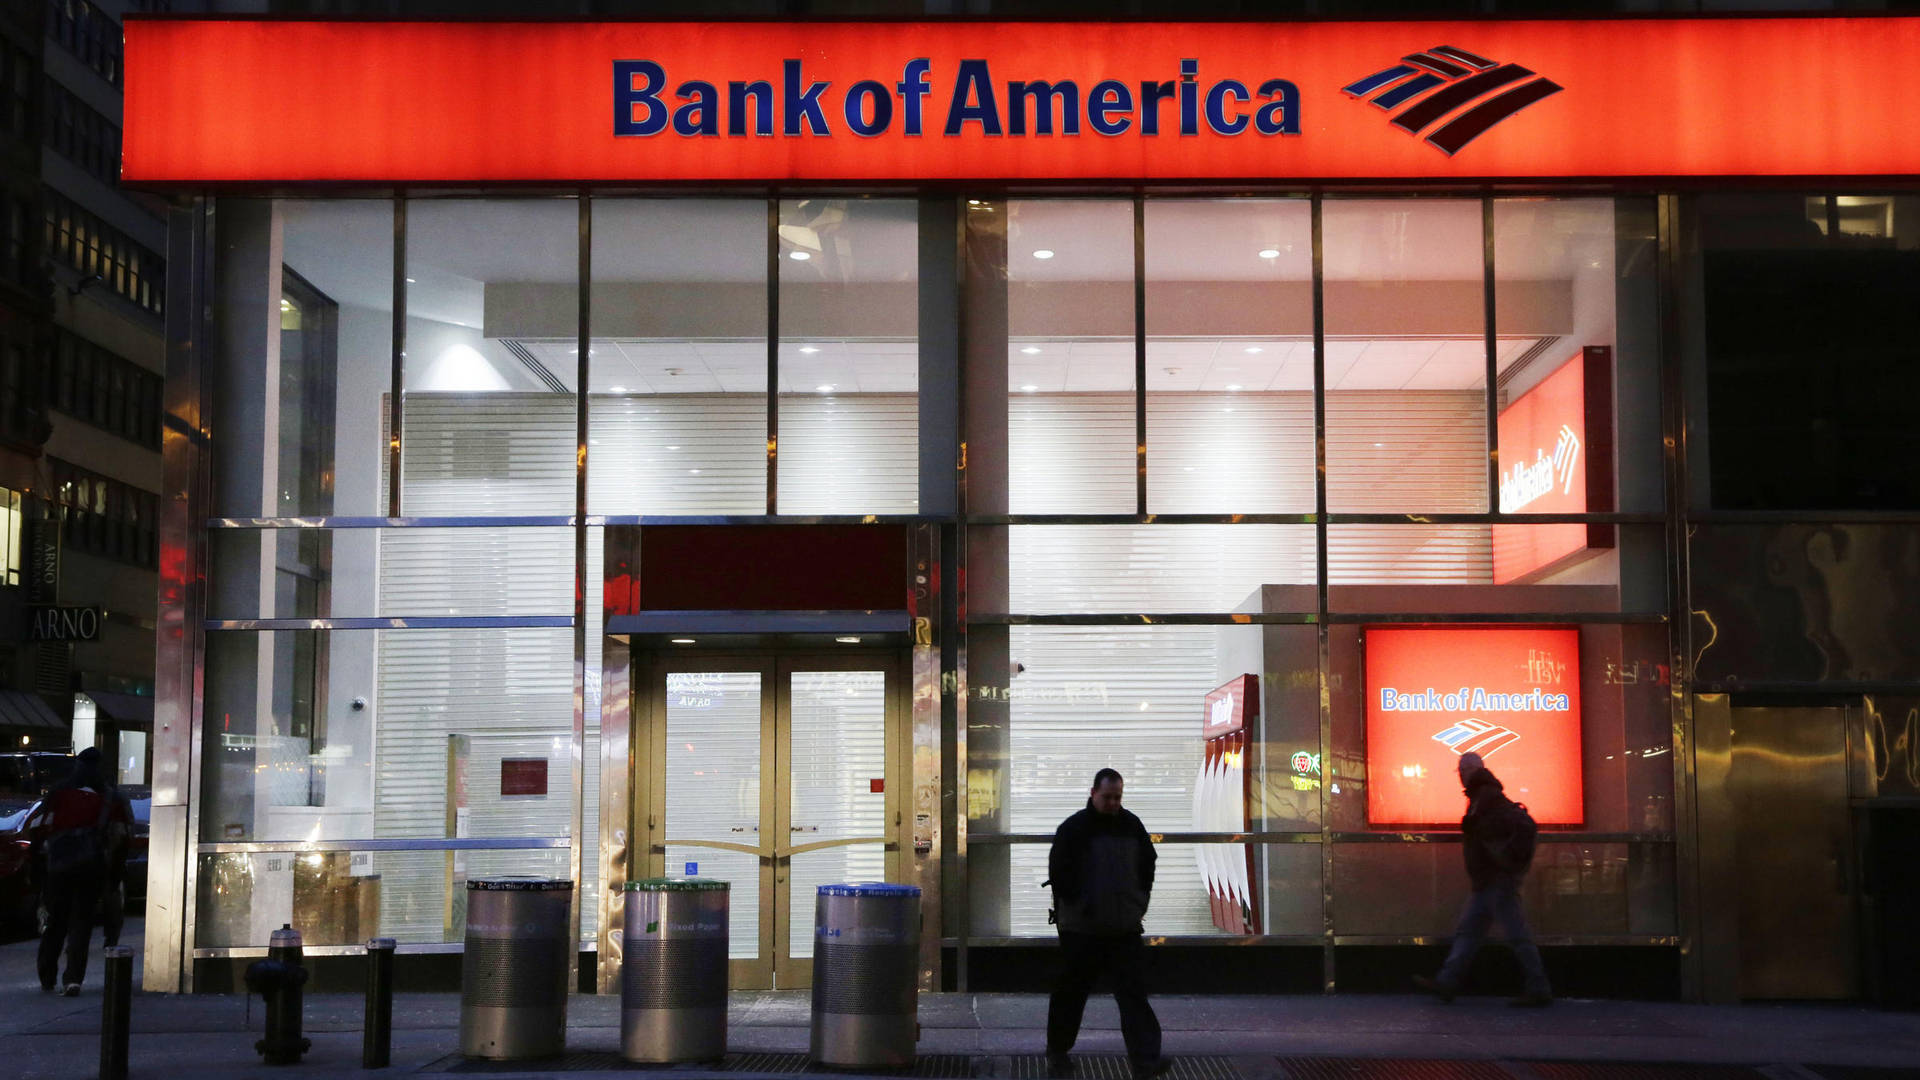 Bank Of America Facade At Night